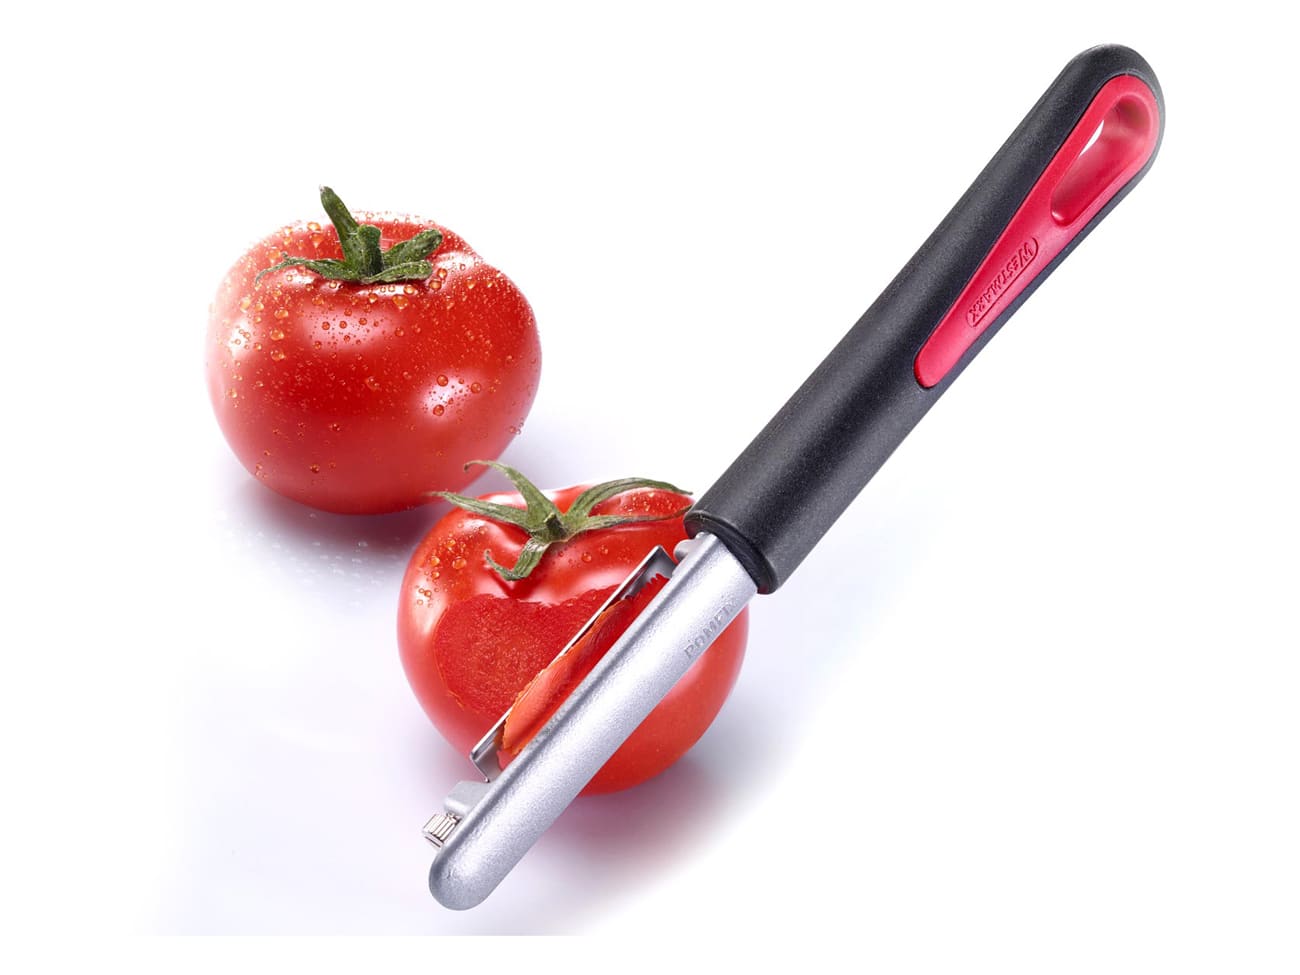 Rosle - Tomato/Kiwi Peeler